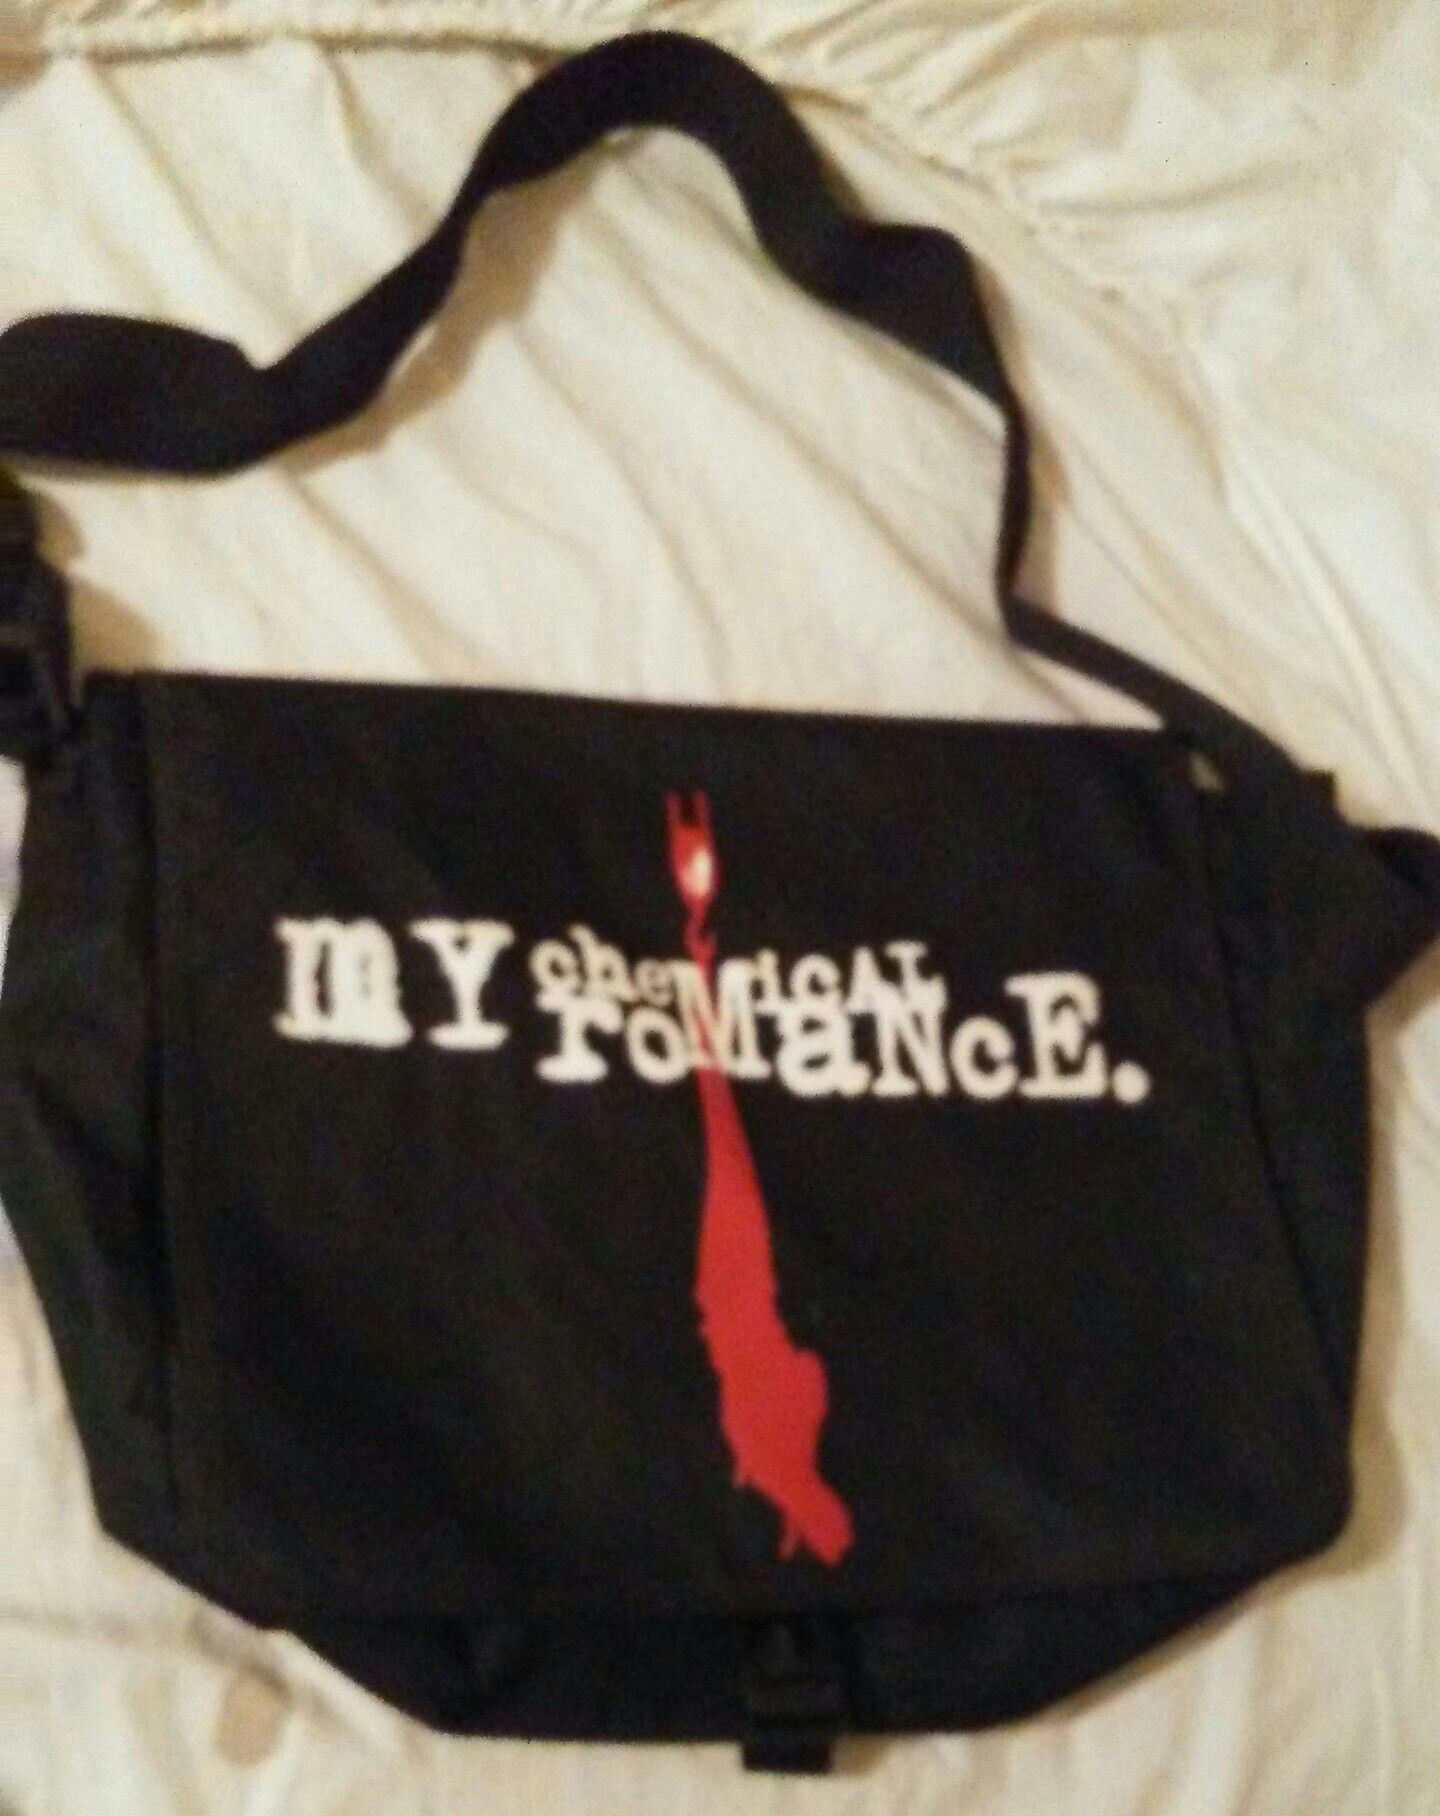 My Chemical Romance Messenger bag